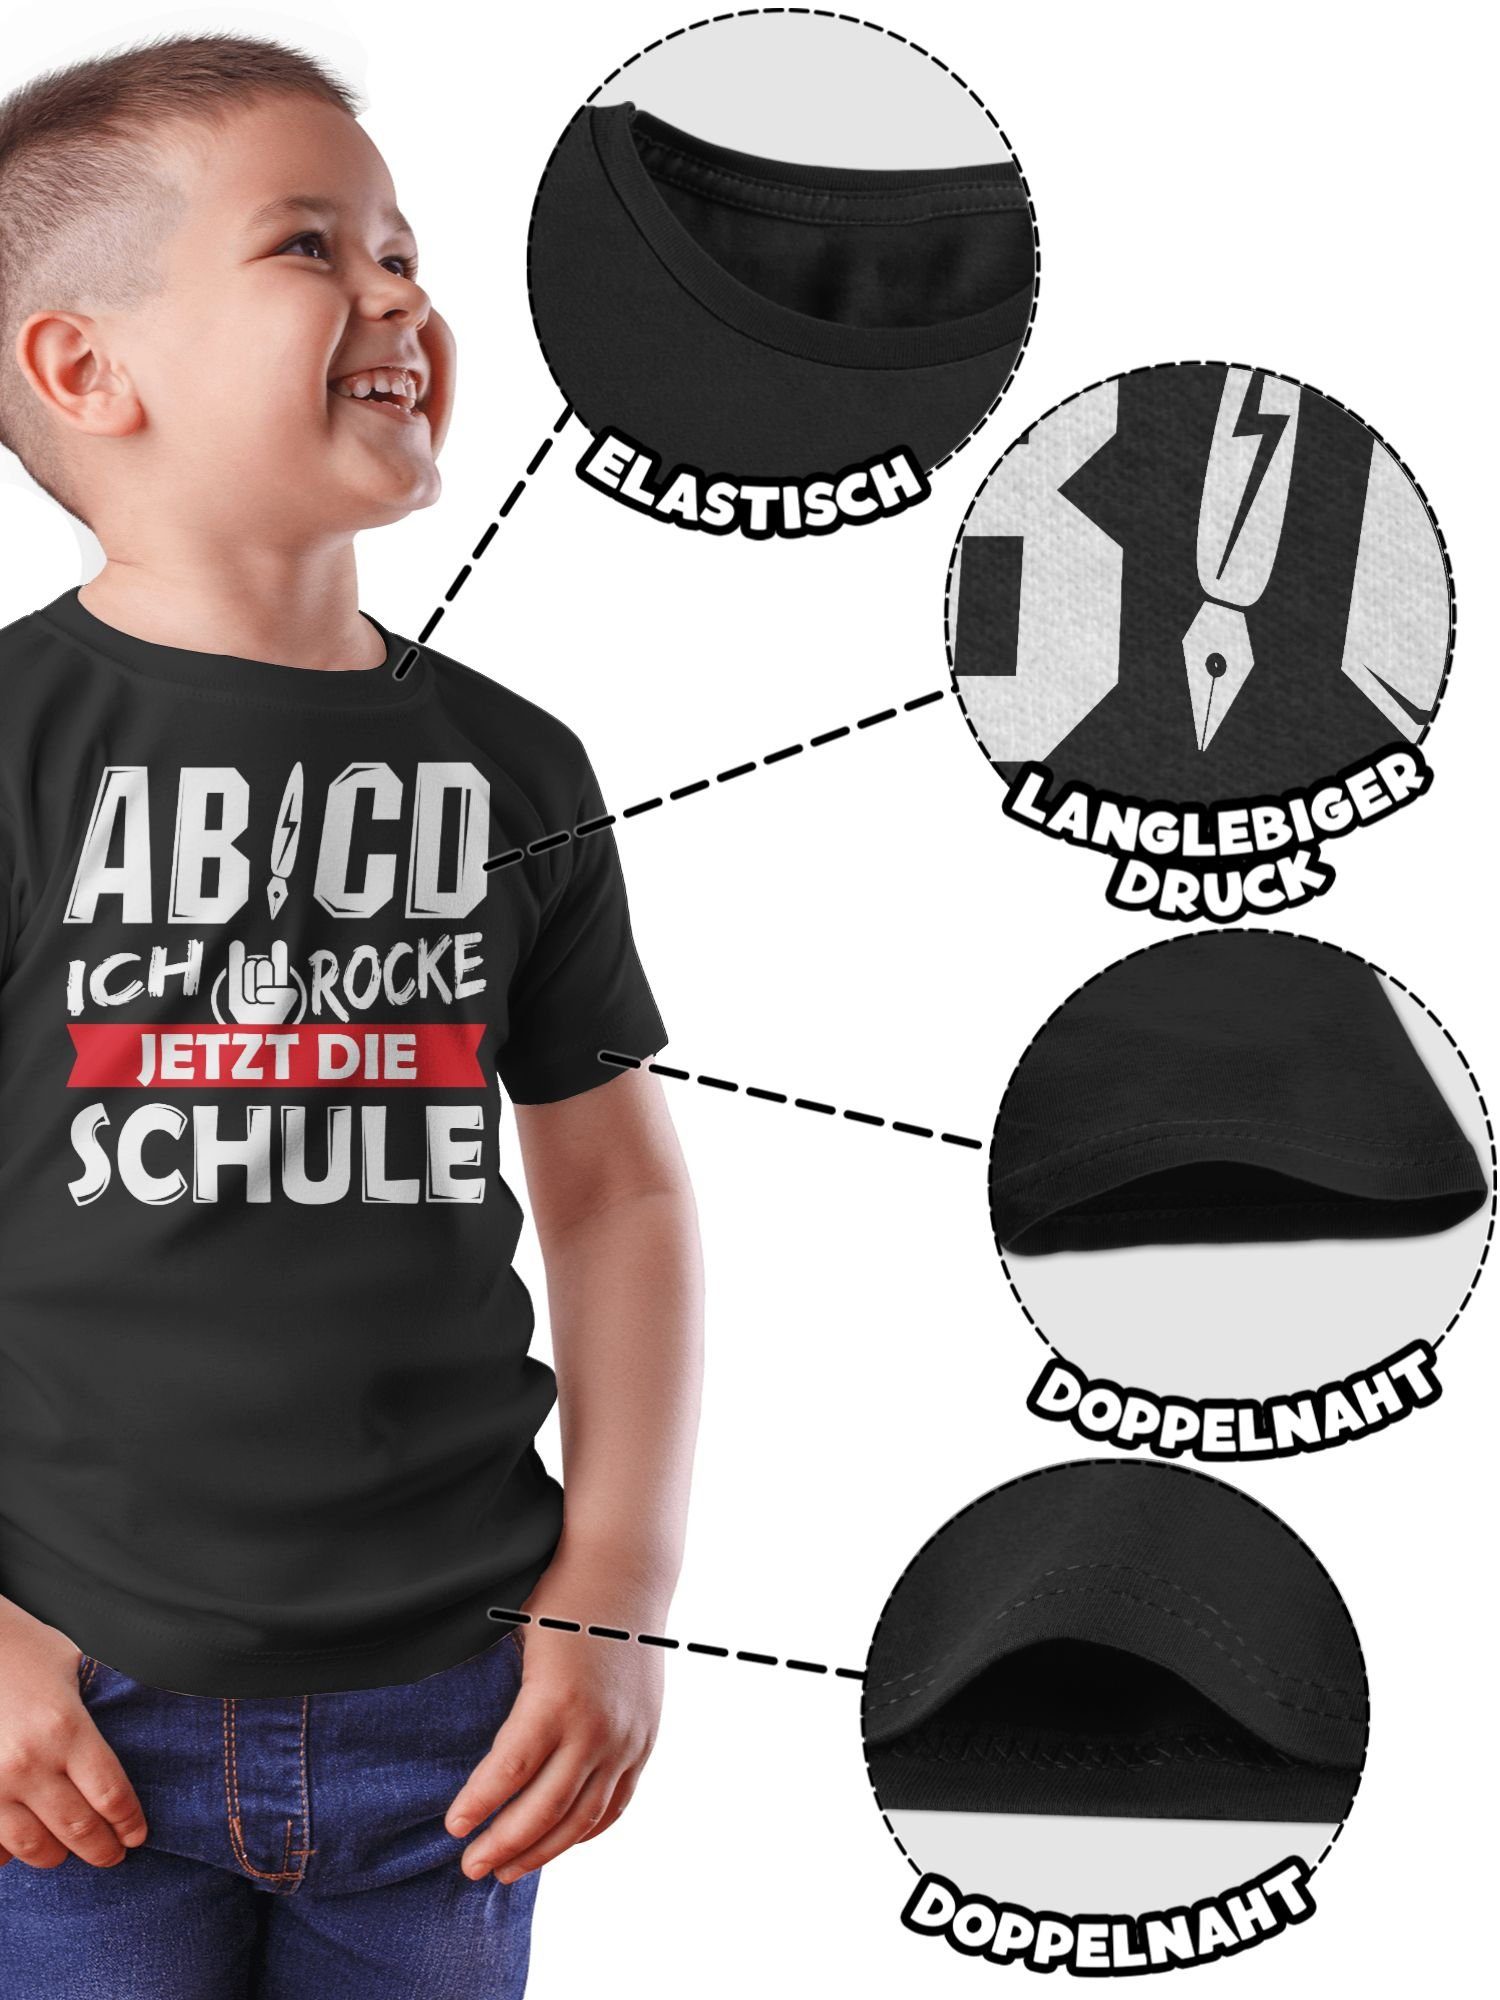 1 jetzt rocke Schulanfang ABCD die Shirtracer Einschulung Ich Junge Geschenke Schwarz T-Shirt Schule